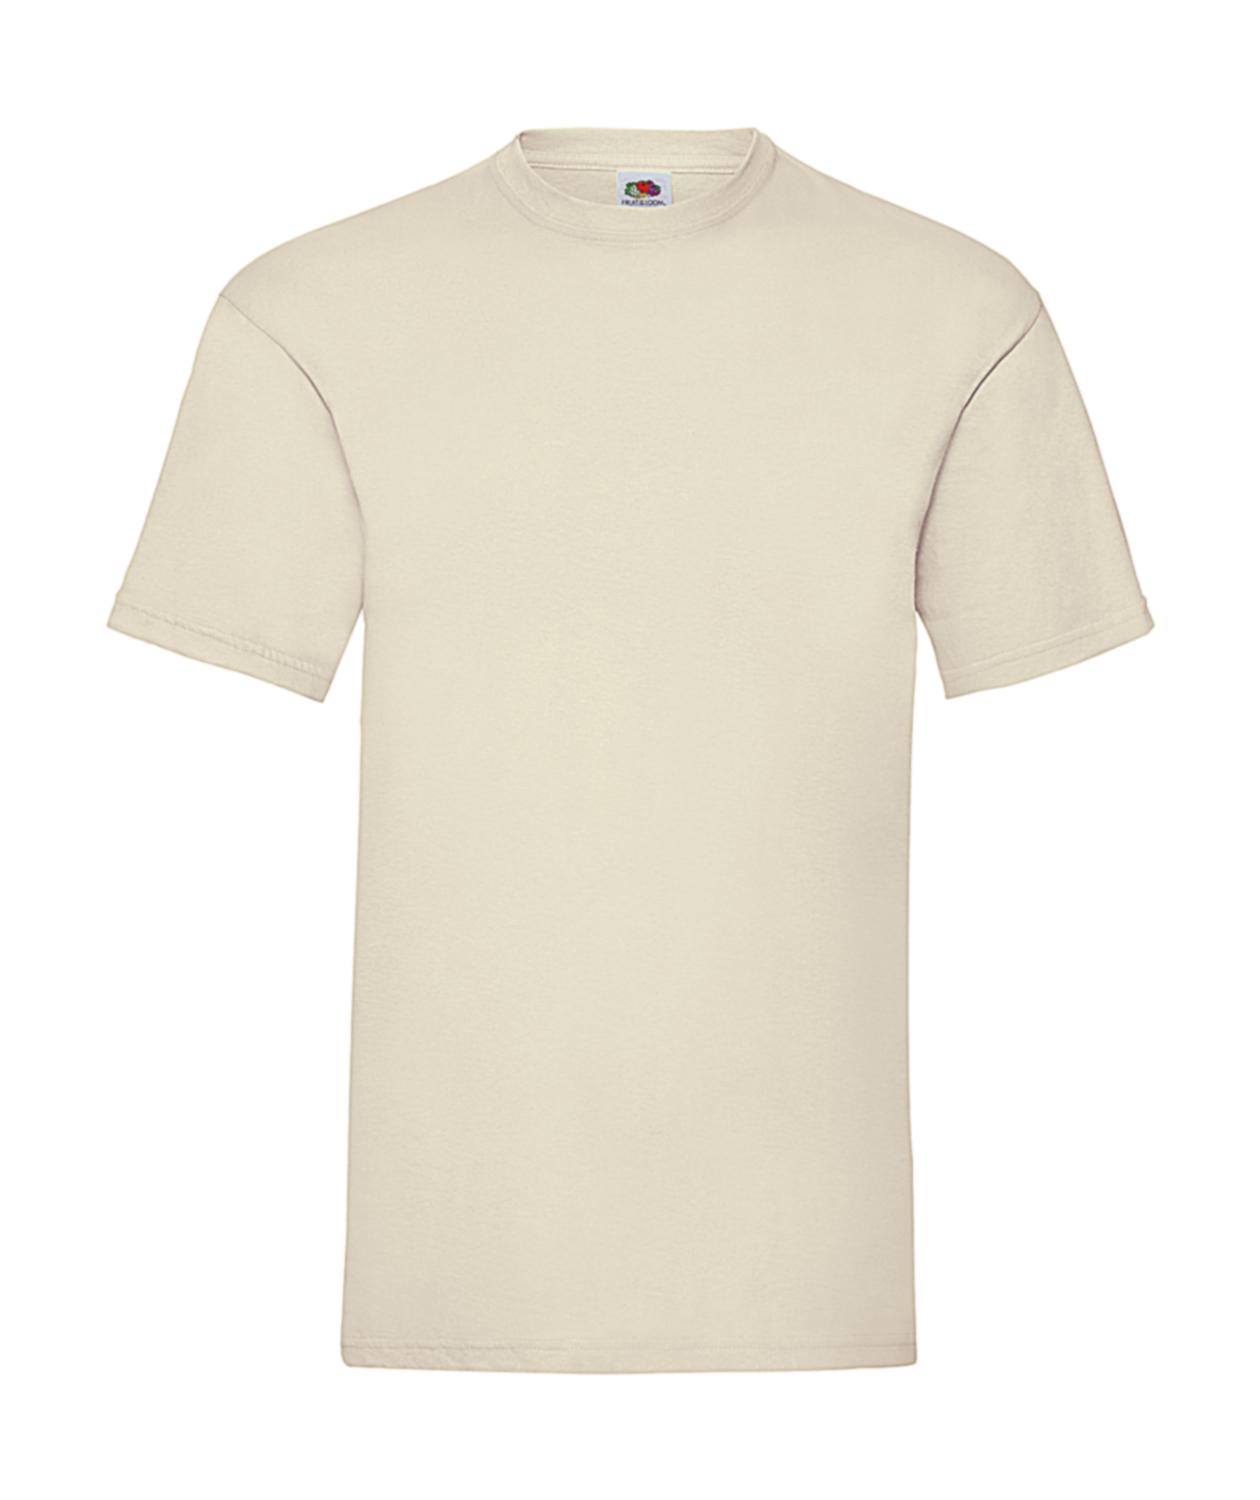 FRUIT OF THE LOOM Unisex T-Shirt